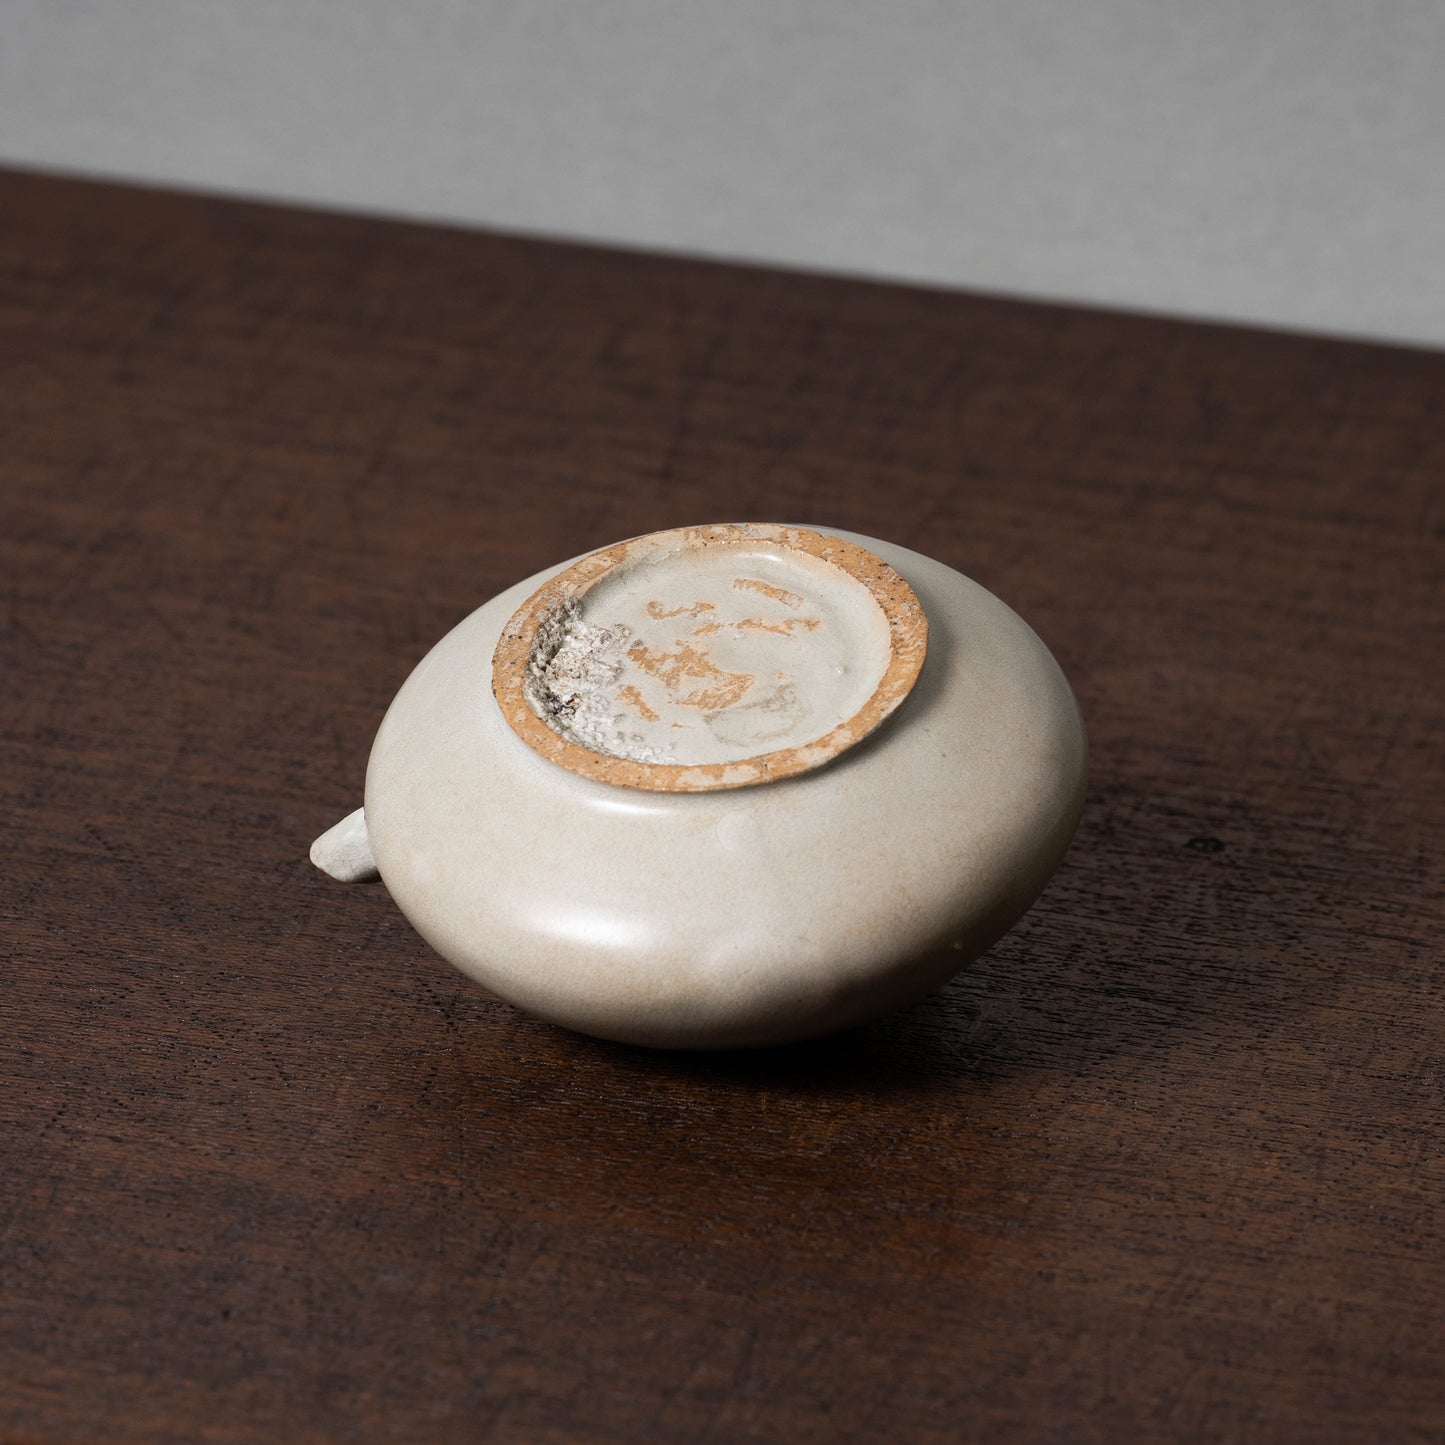 Joseon Dynasty White Porcelain Water Dropper with Flower Design in Underglaze Iron